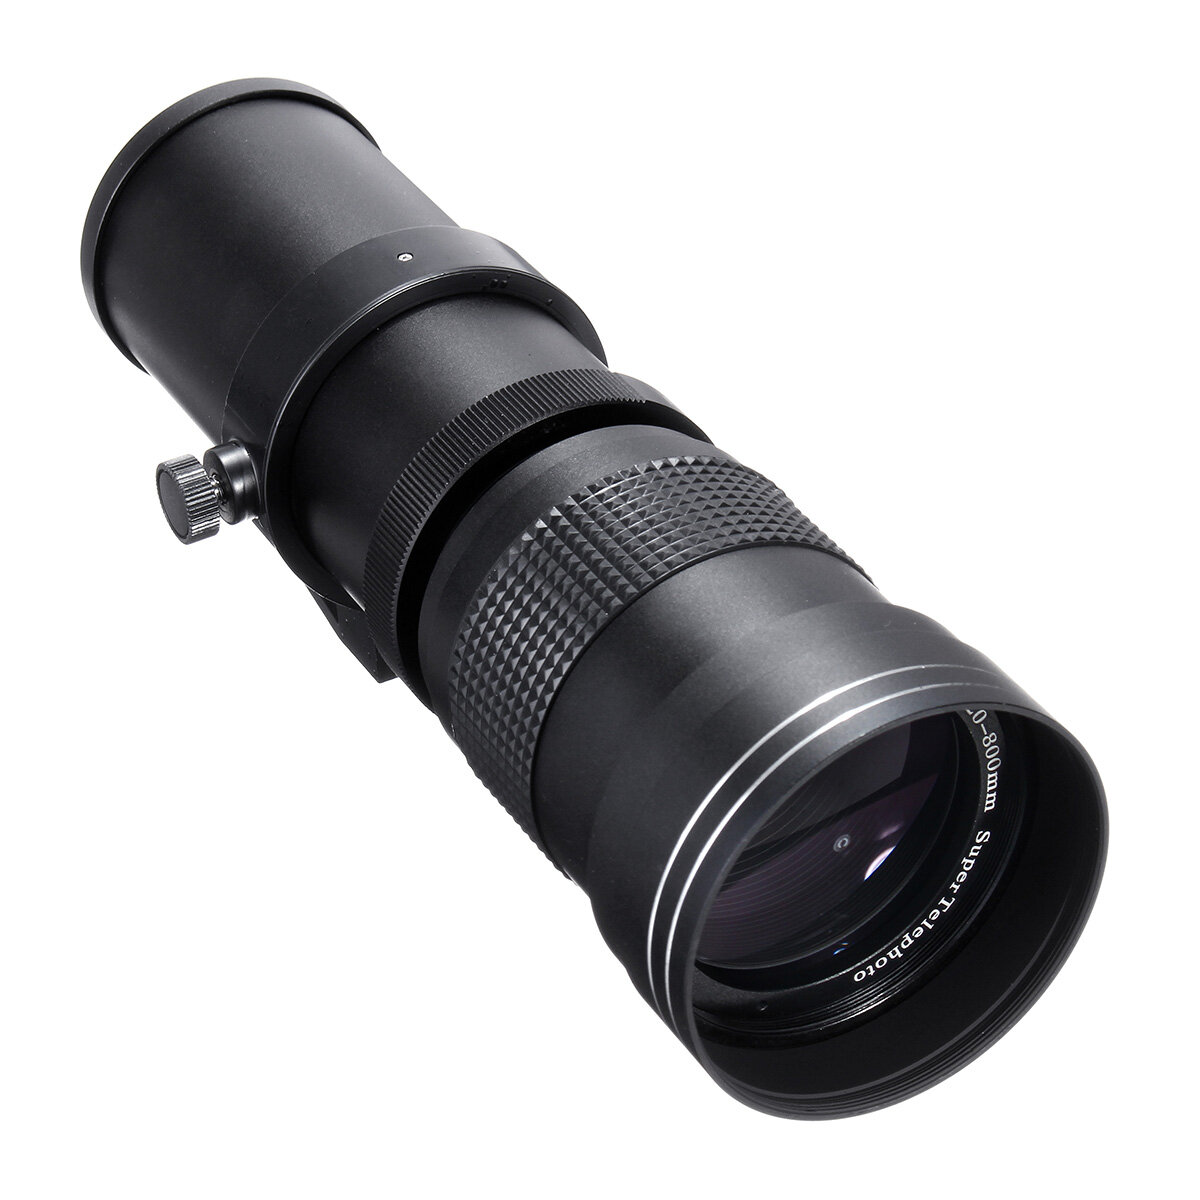 IPRee® 420-800mm F/8.3-16 Lente Super Teleobjetiva Manual Zoom + Montagem T para Câmeras Nikon, Sony e Pentax SLR